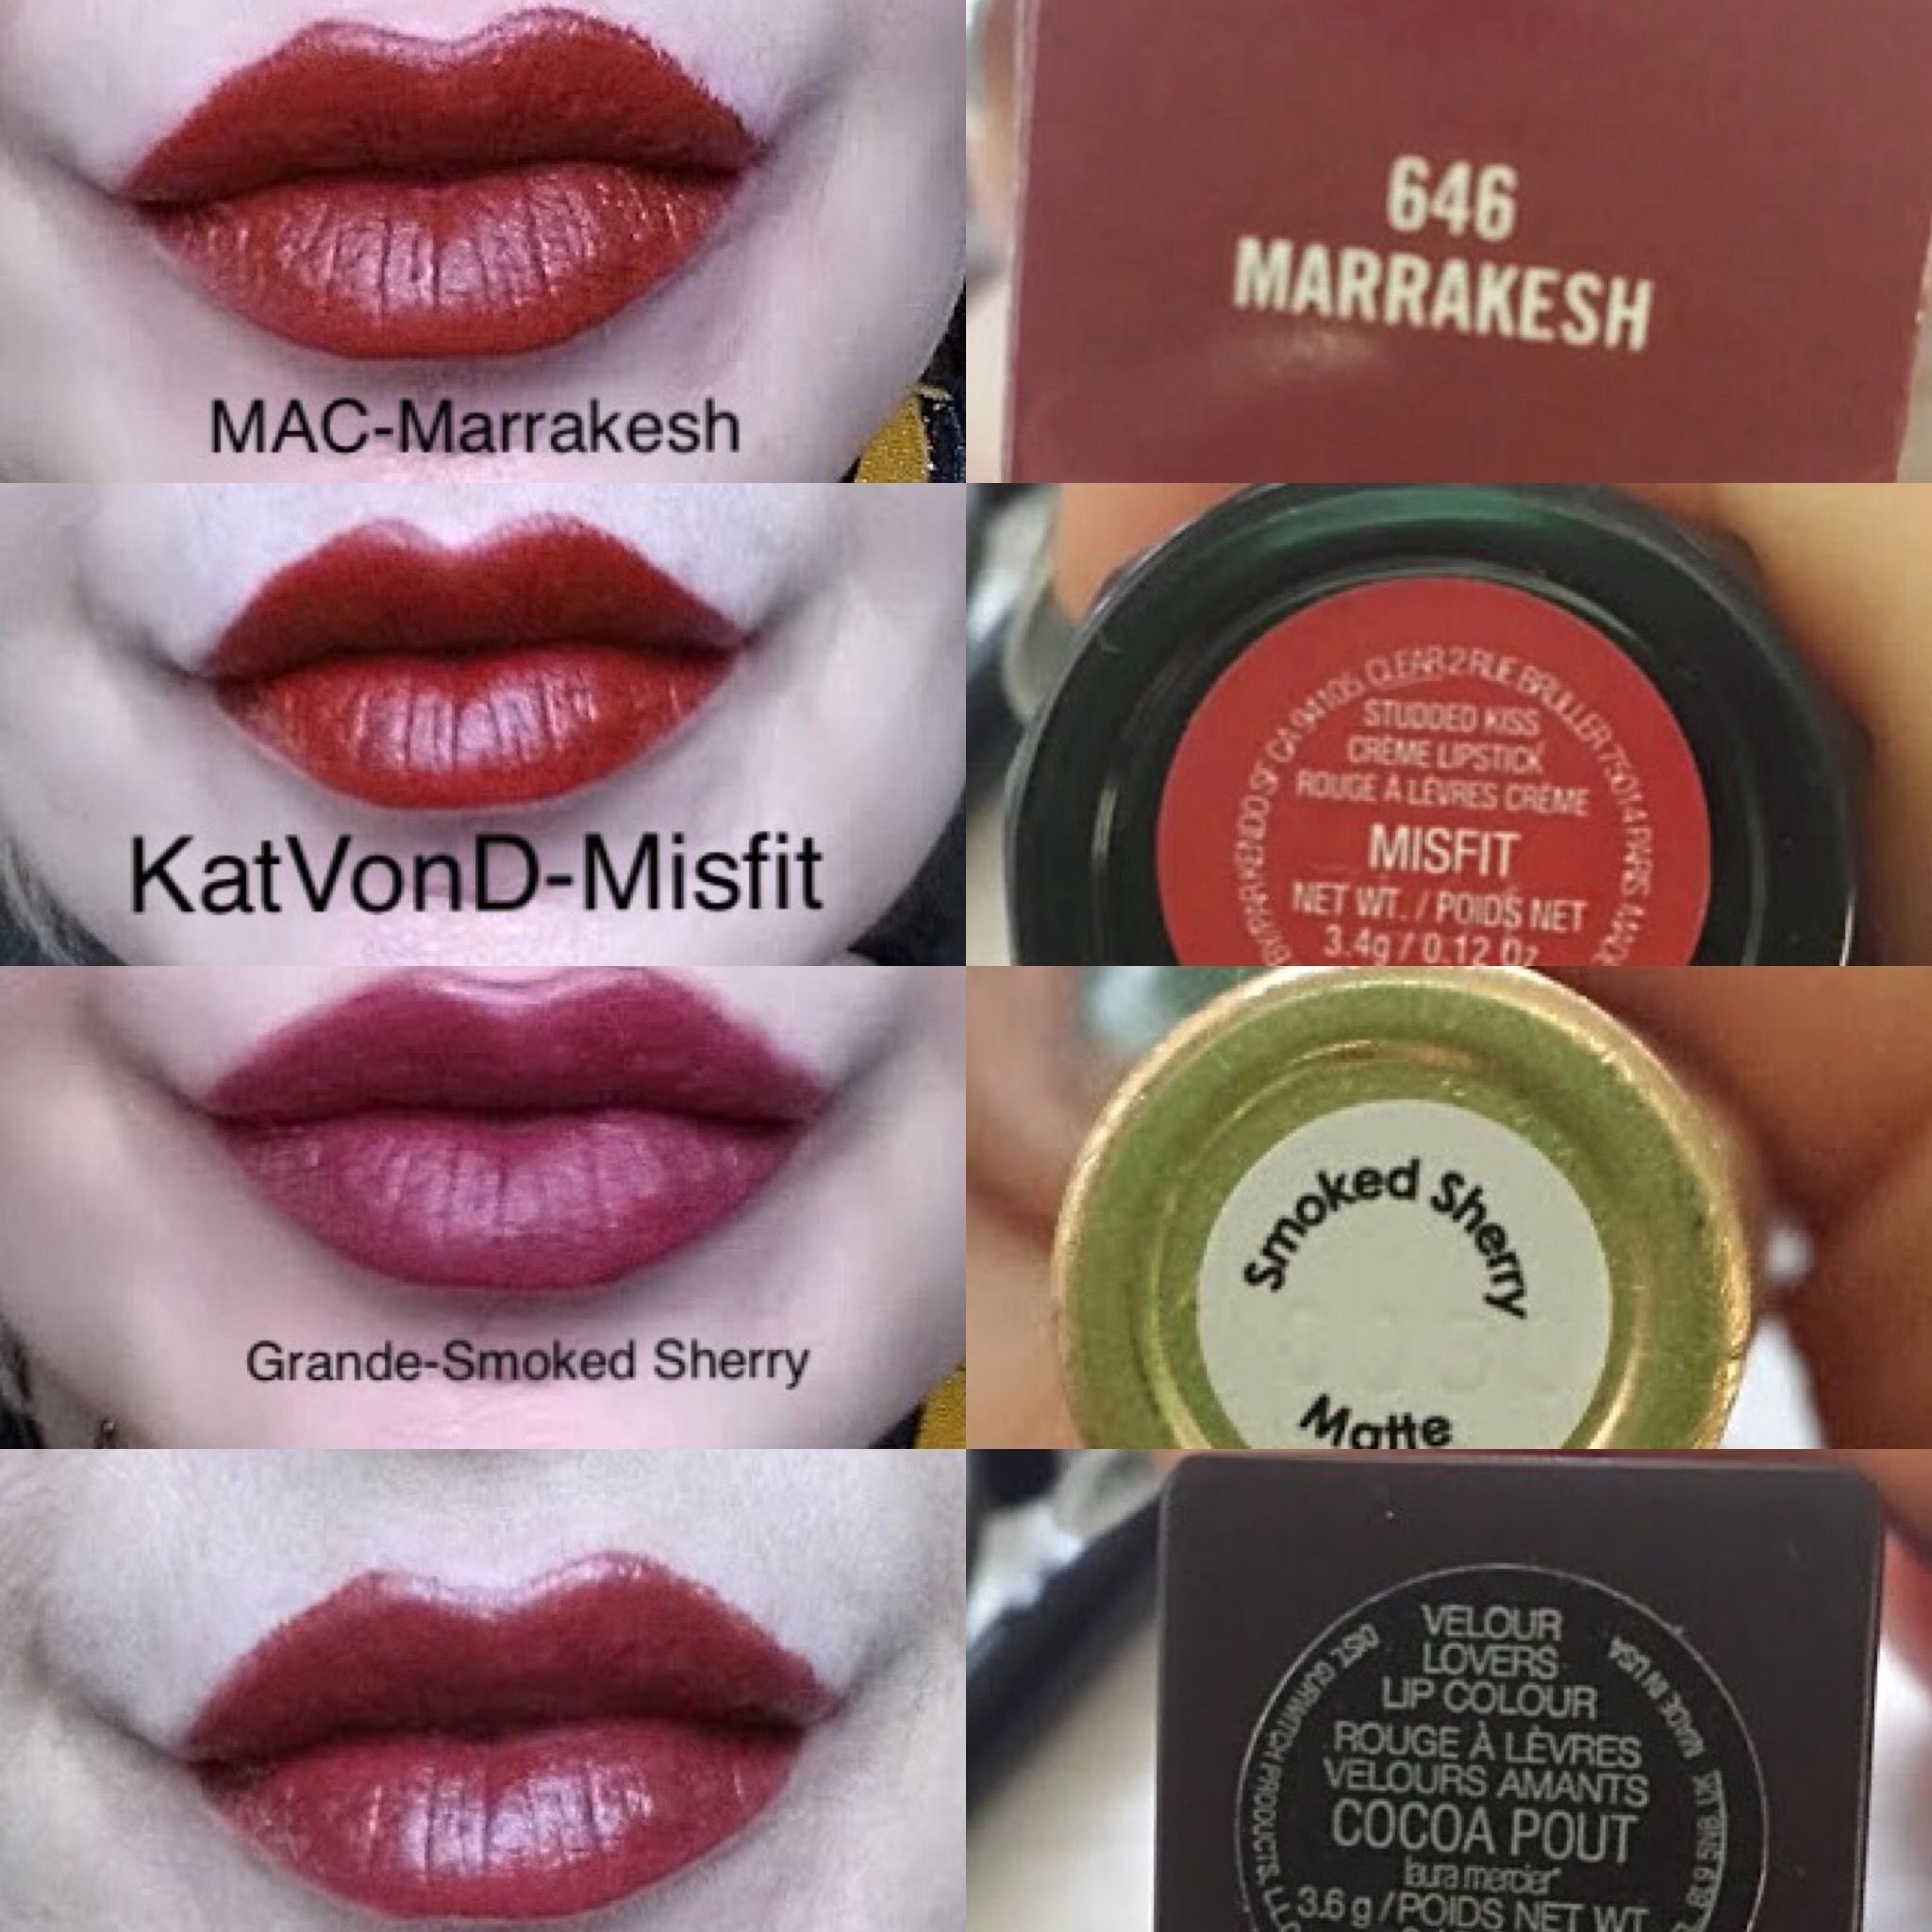 Re: 100 Days of Lipstick Challenge - Page 575 - Beauty Insider Community